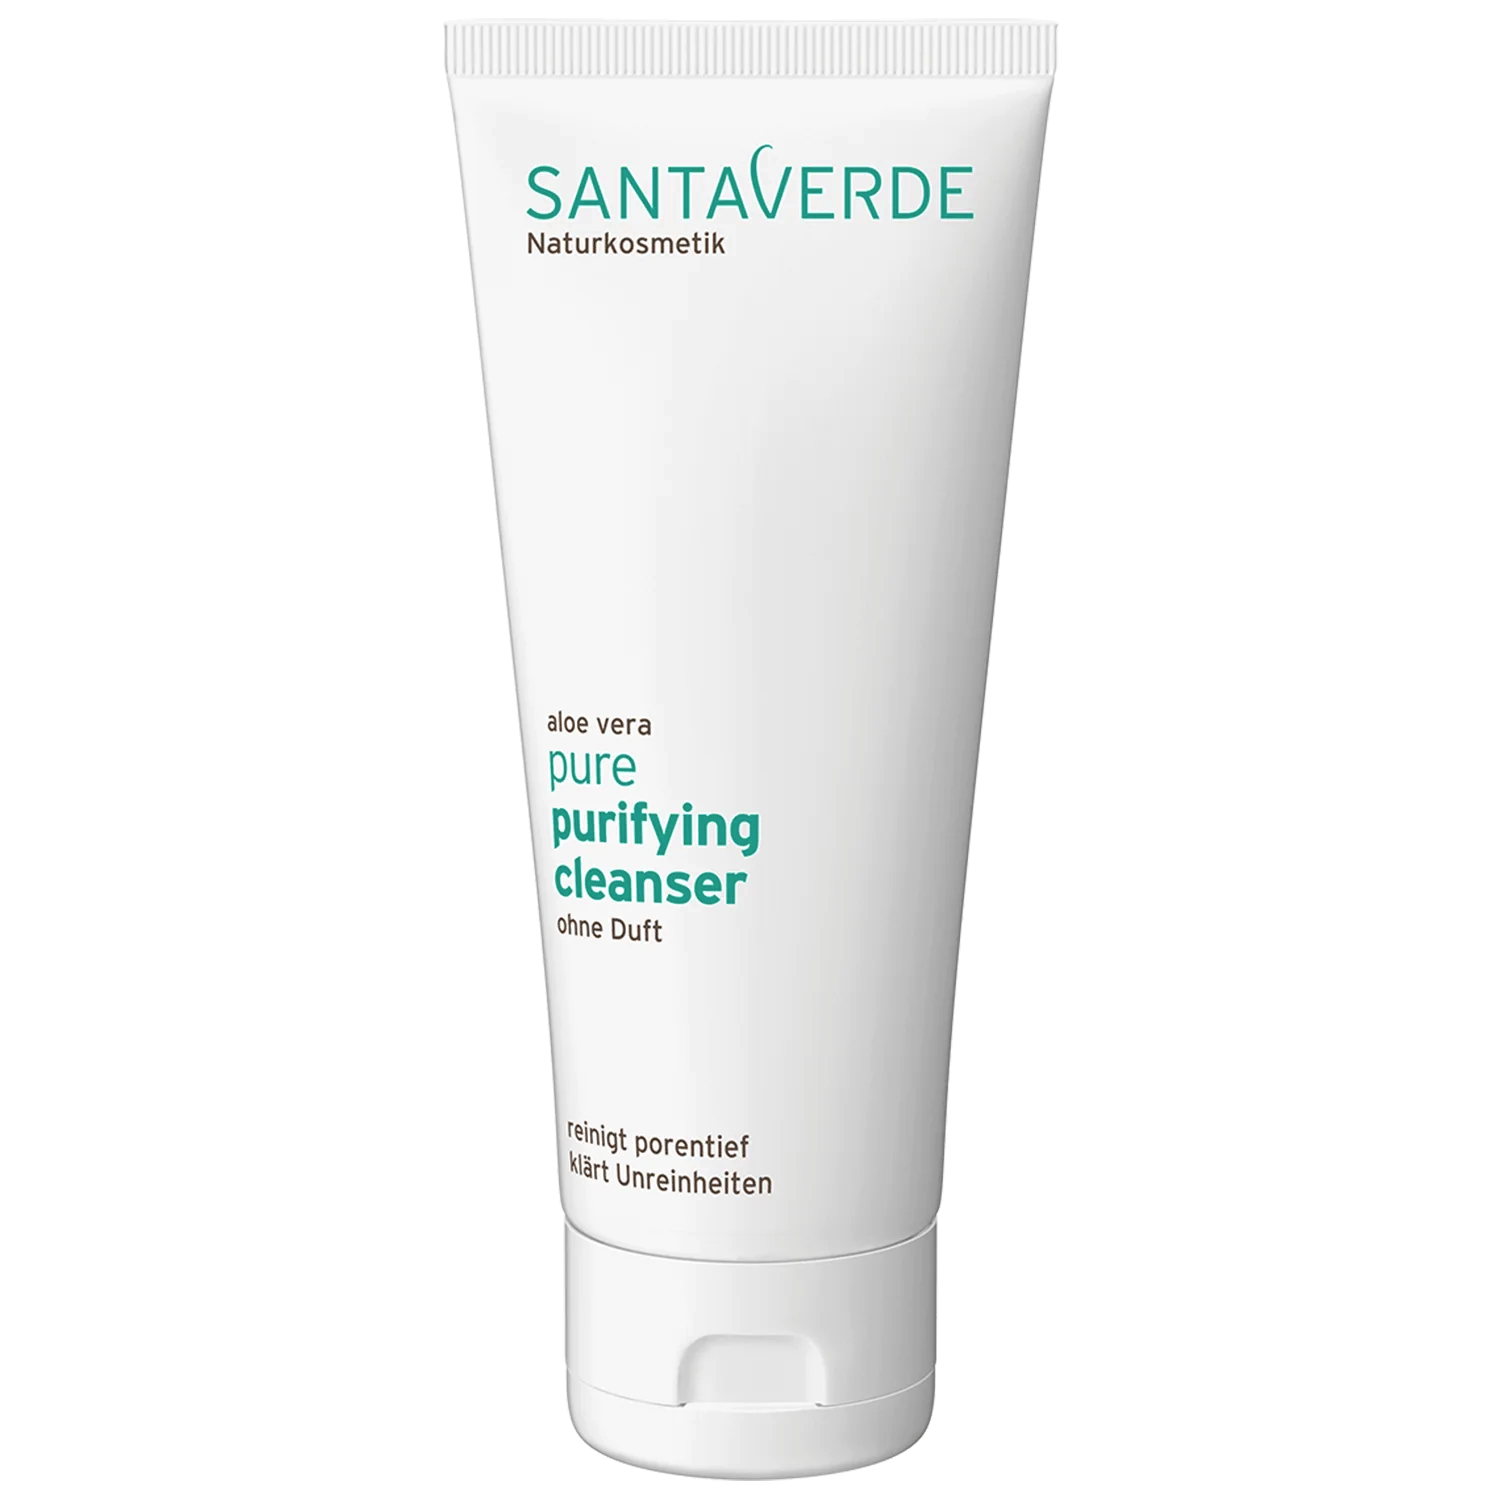 Santaverde pure purifying cleanser | 100ml | Aloe Vera & ohne Duft